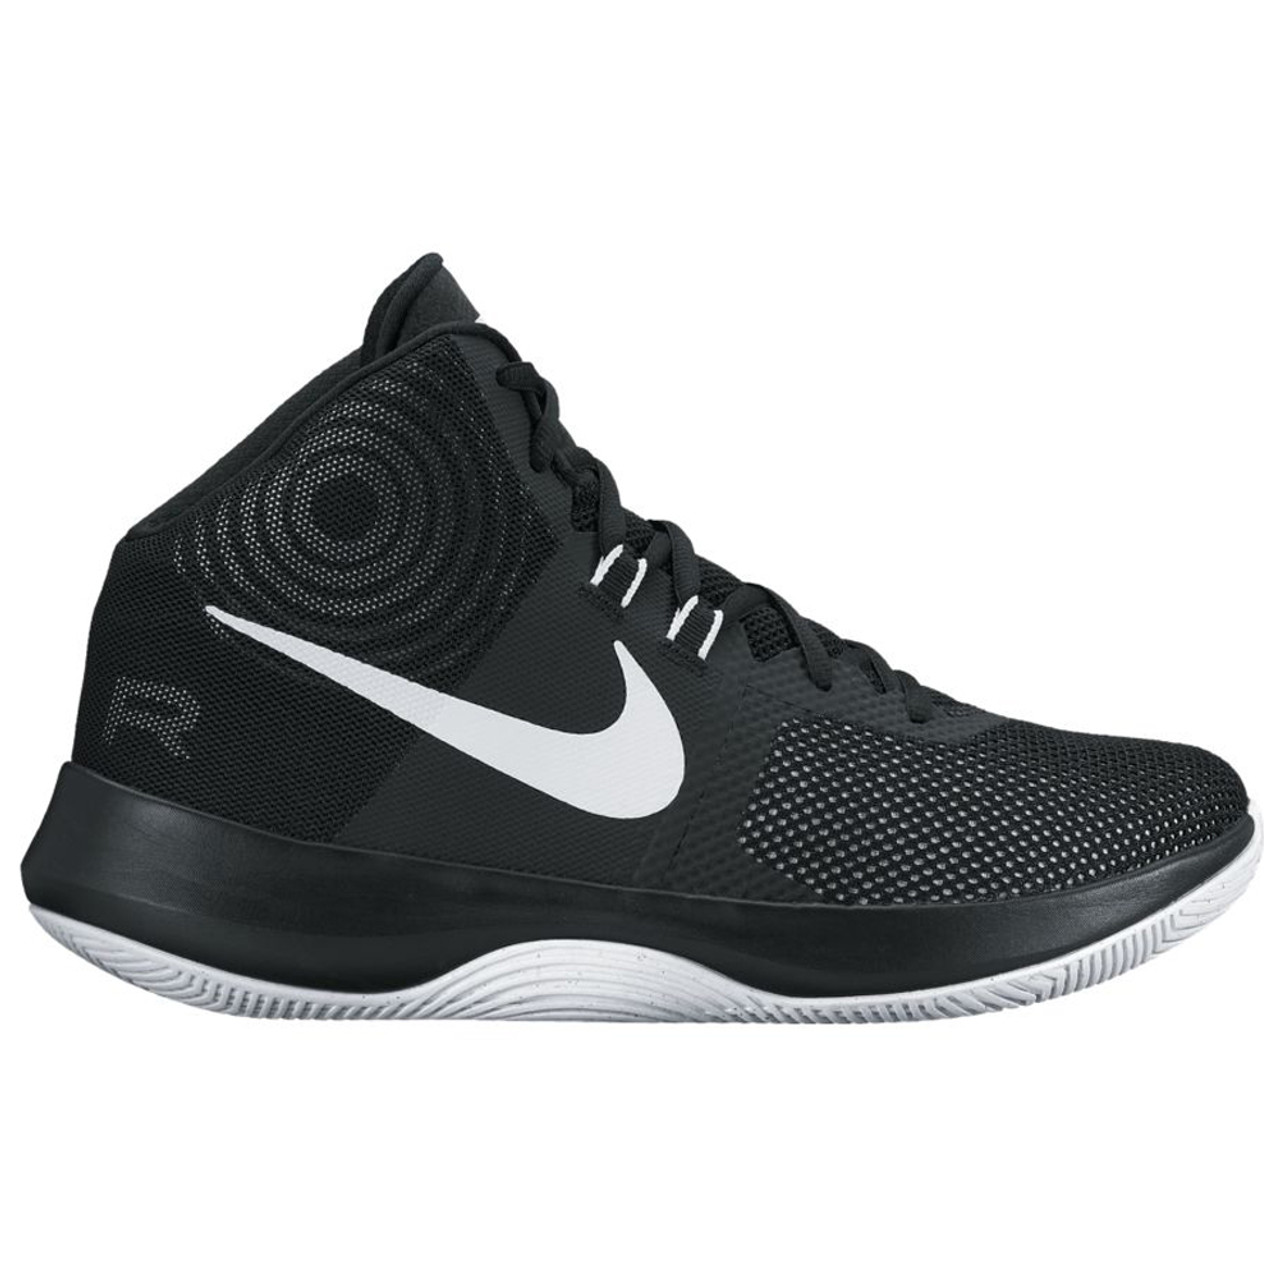 Nike Men's Precision Basketball Shoe Black | Discount Nike Men's Athletic & More - Shoolu.com | Shoolu.com